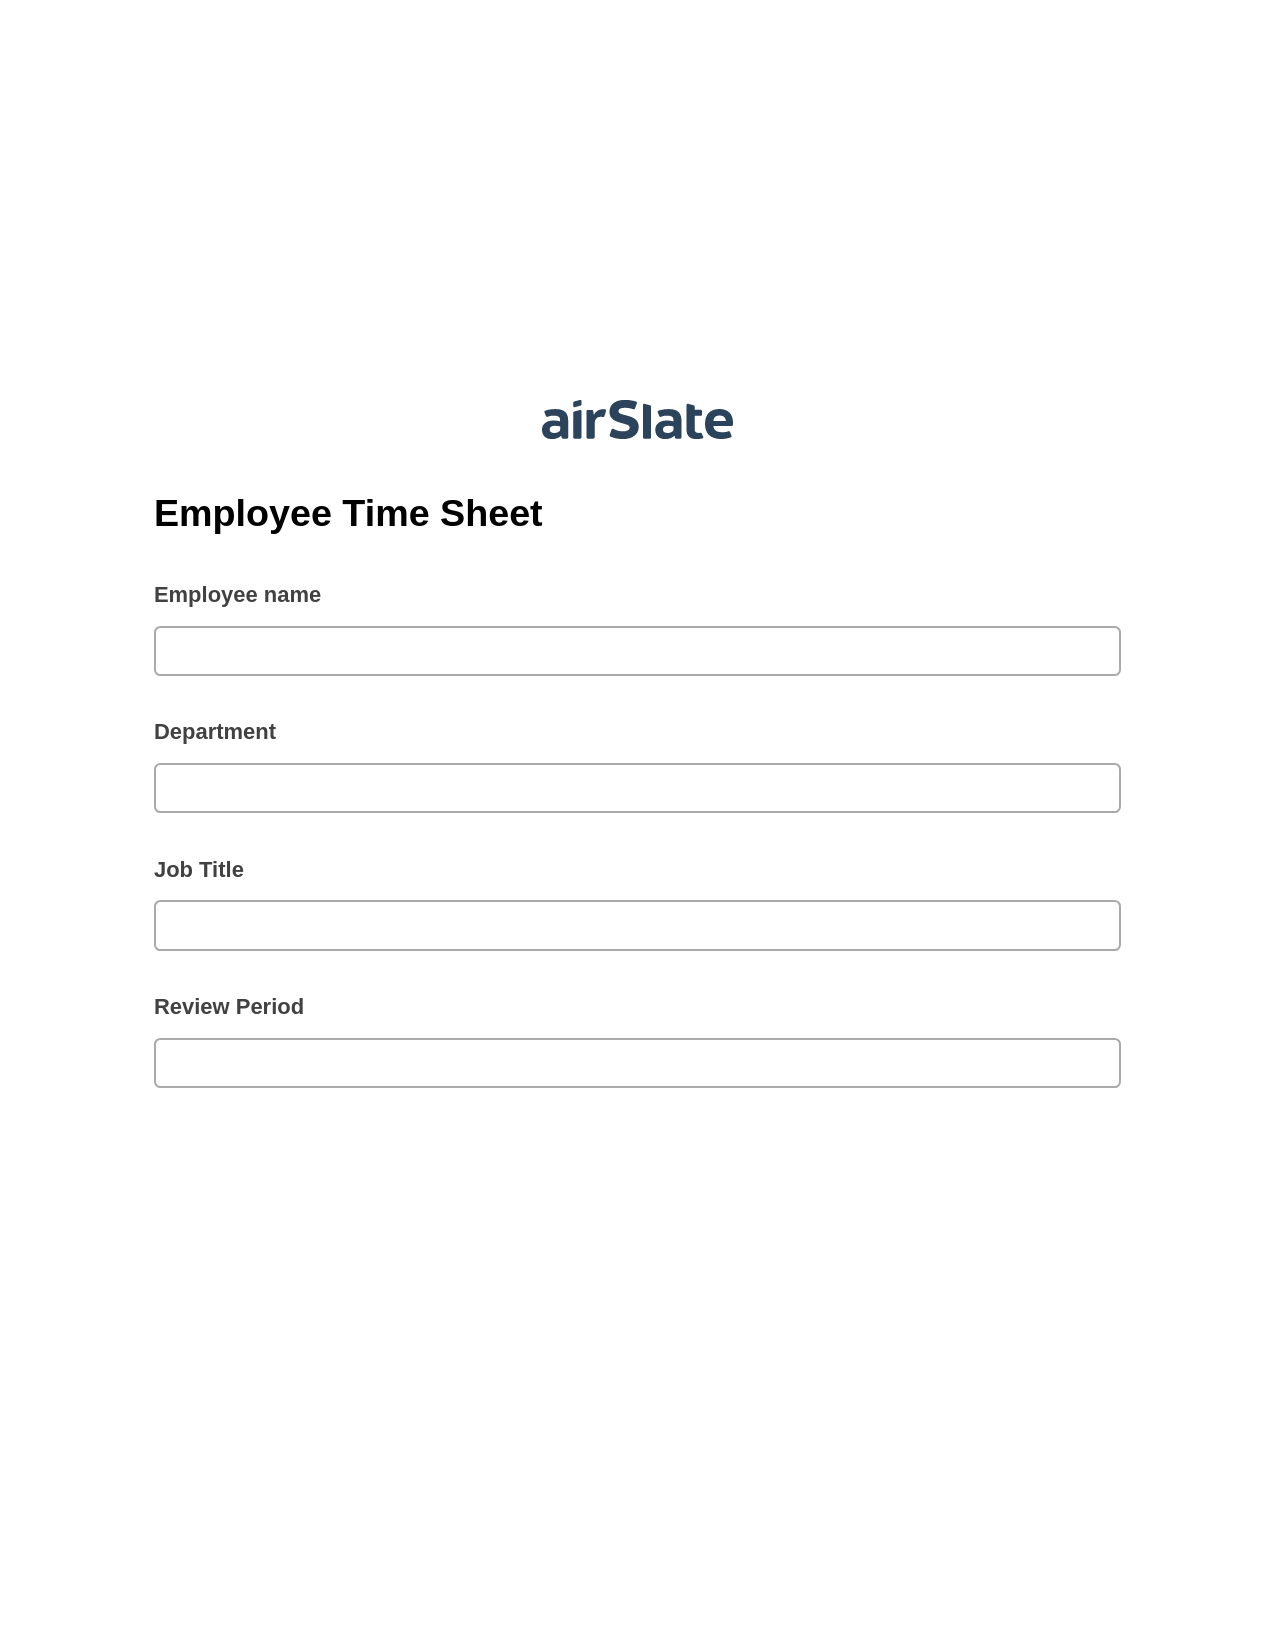 Employee Time Sheet Prefill from NetSuite records, Update Audit Trail Bot, Slack Notification Postfinish Bot